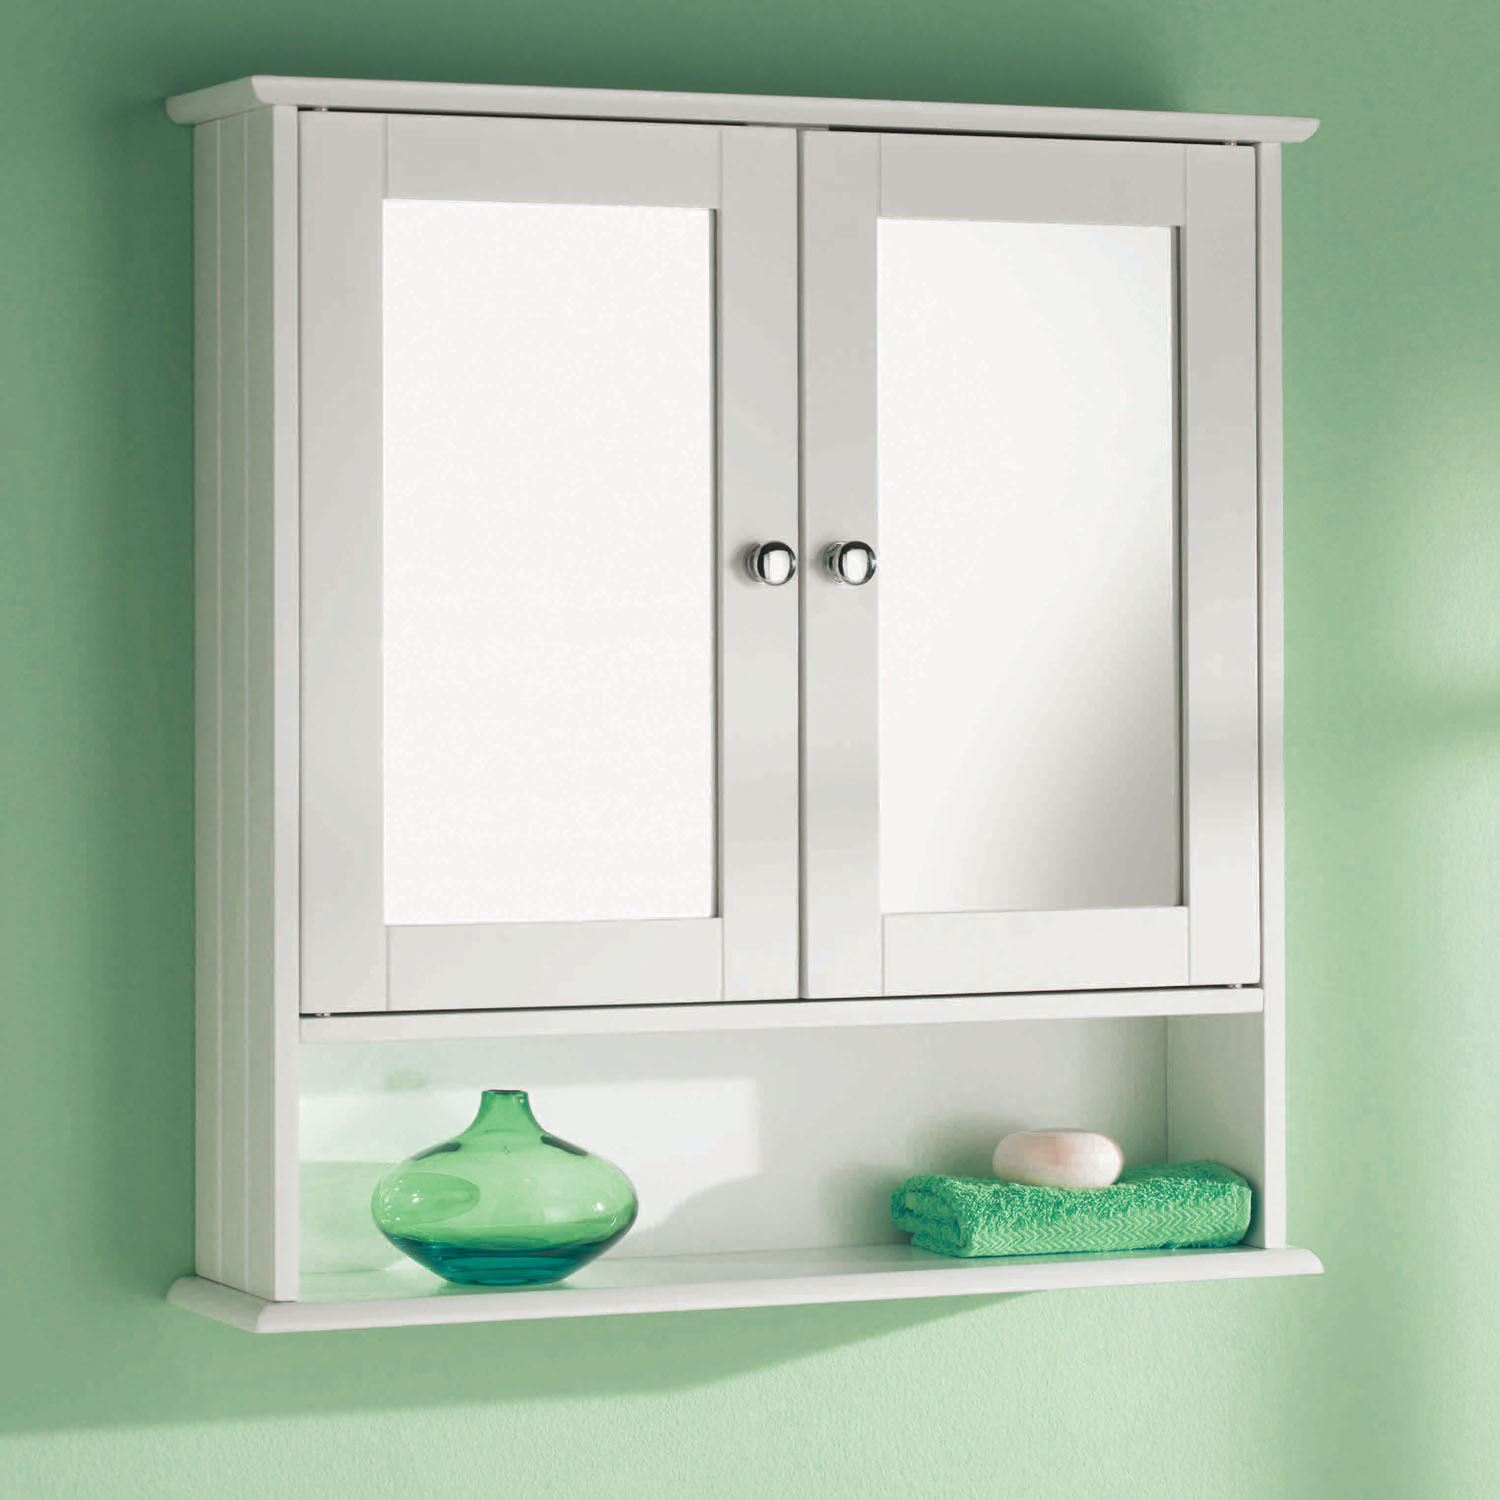 Double Door Mirror Shelf Wall Mounted Wood Storage Bathroom regarding size 1500 X 1500